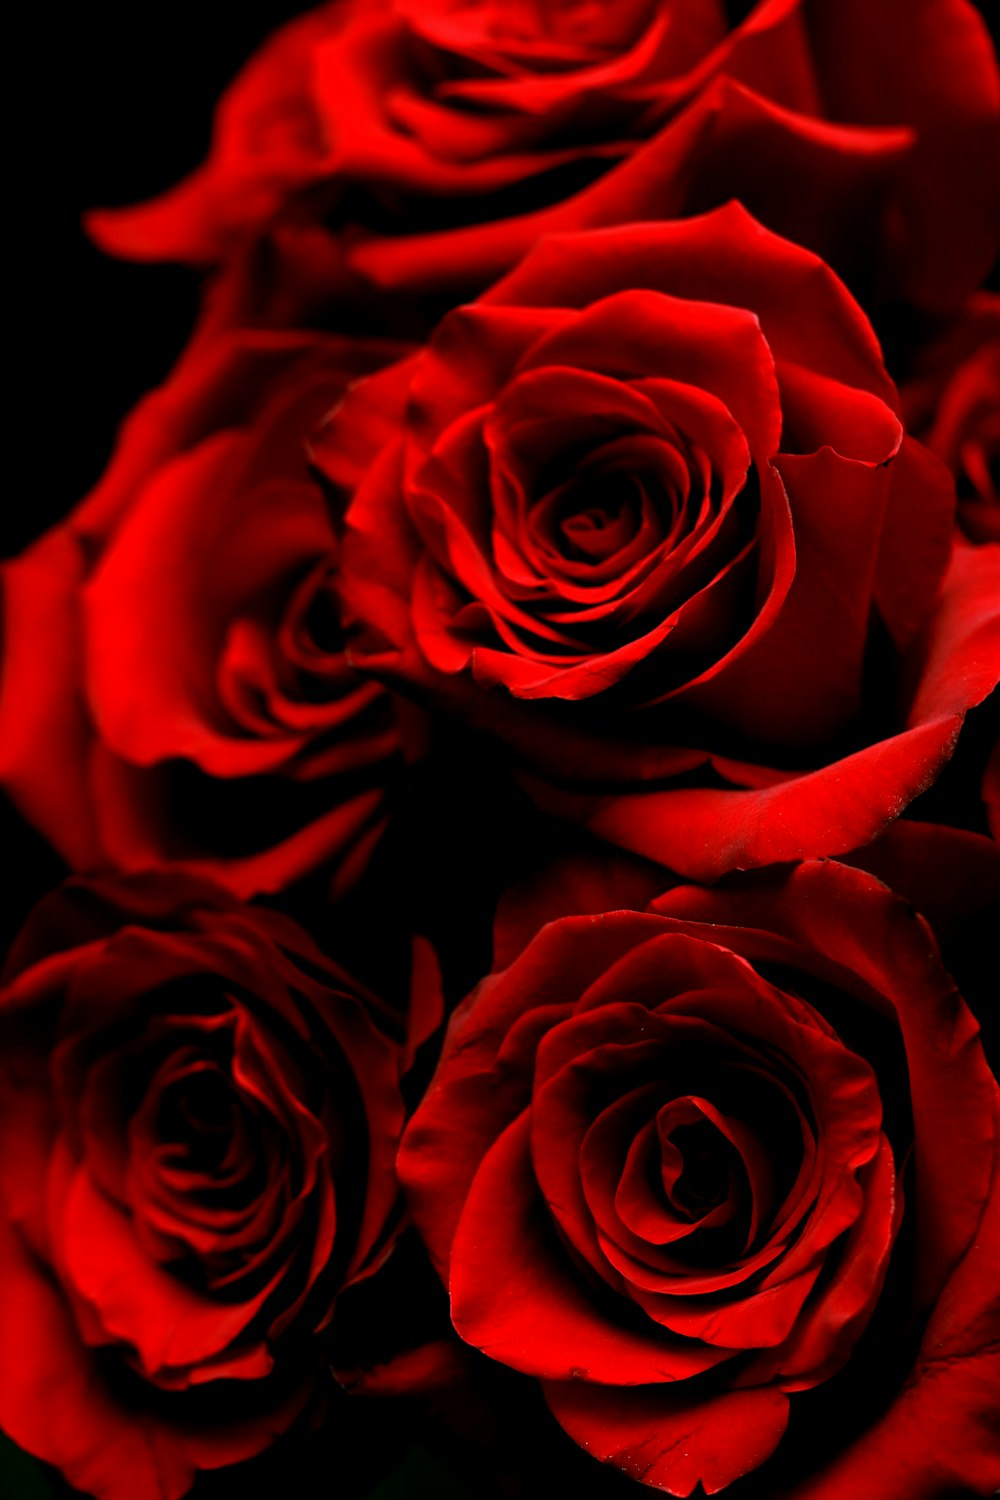 Red roses photo – Free Flower Image on Unsplash